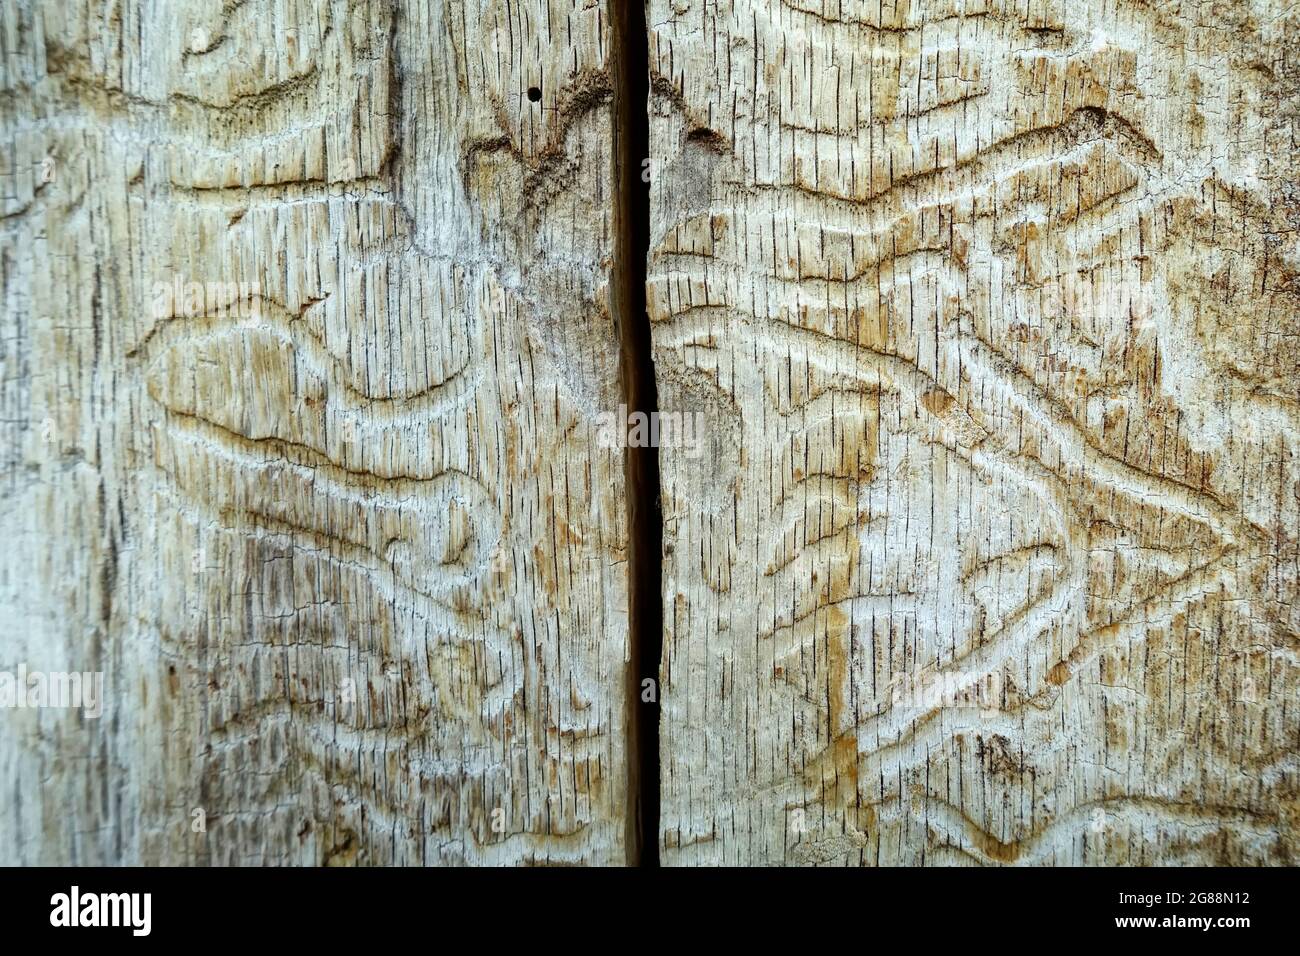 Bark beetles in a tree Stock Photo